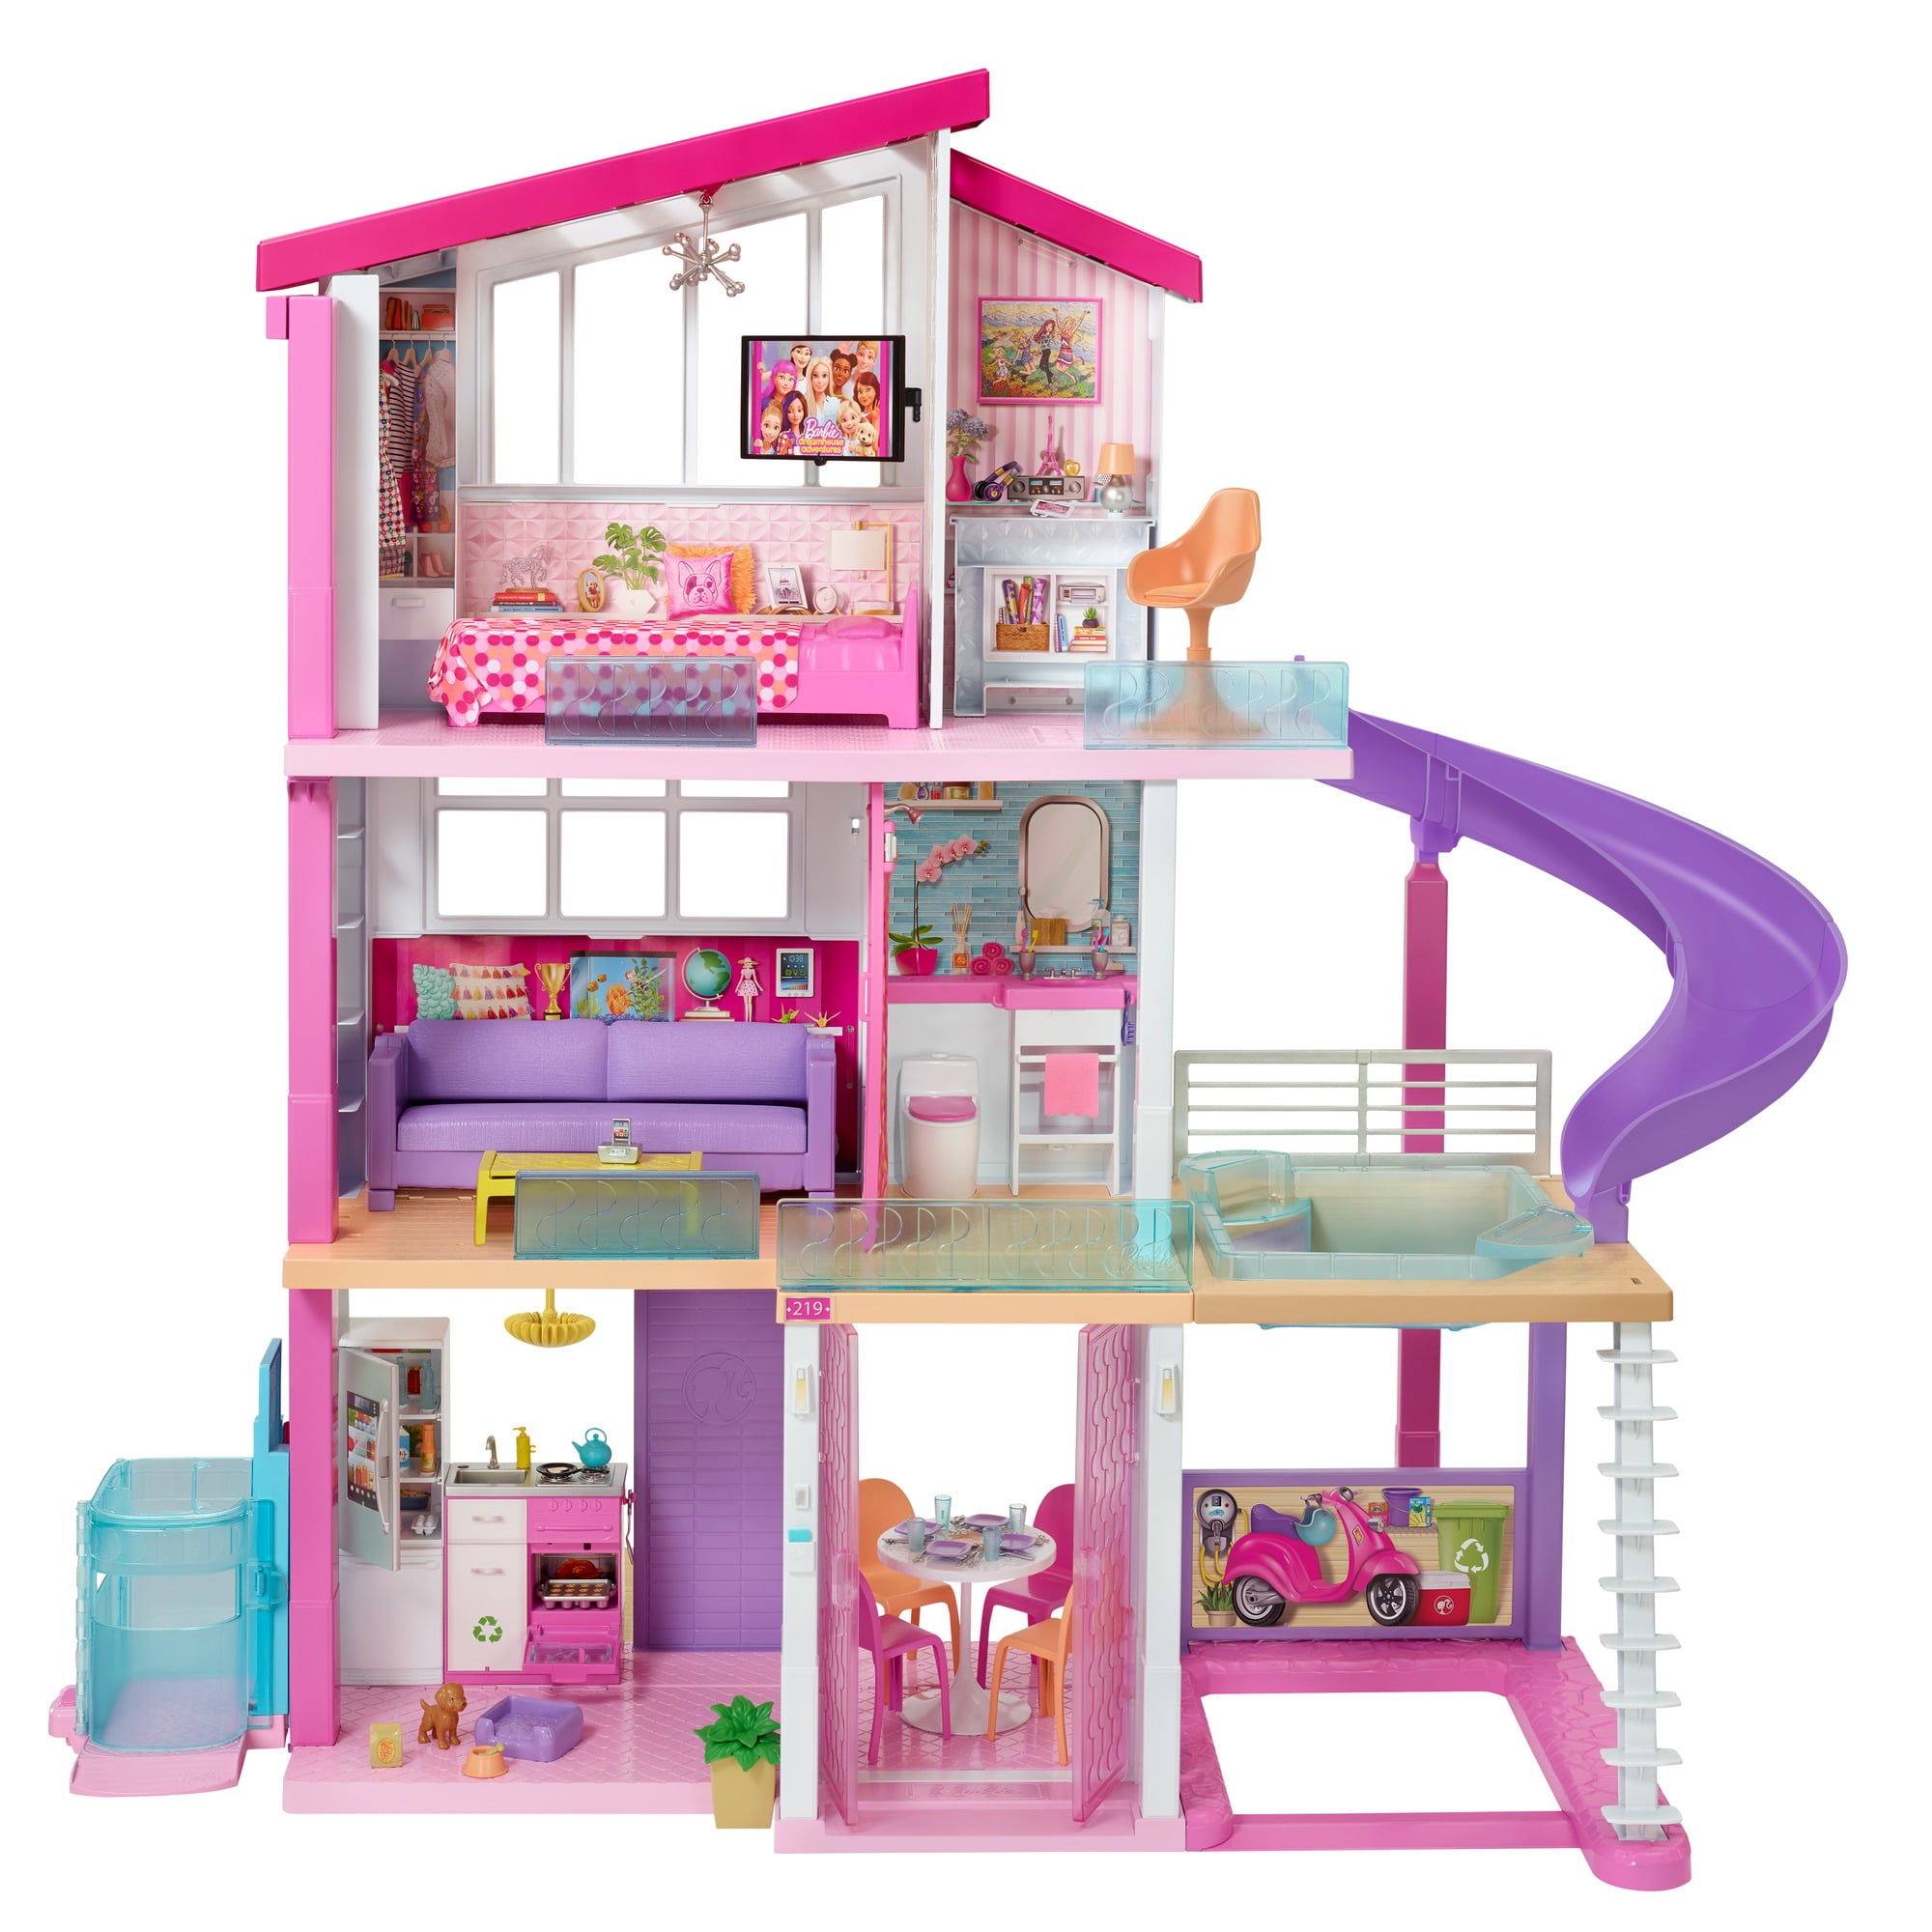 Barbie DreamHouse Dollhouse with Pool 